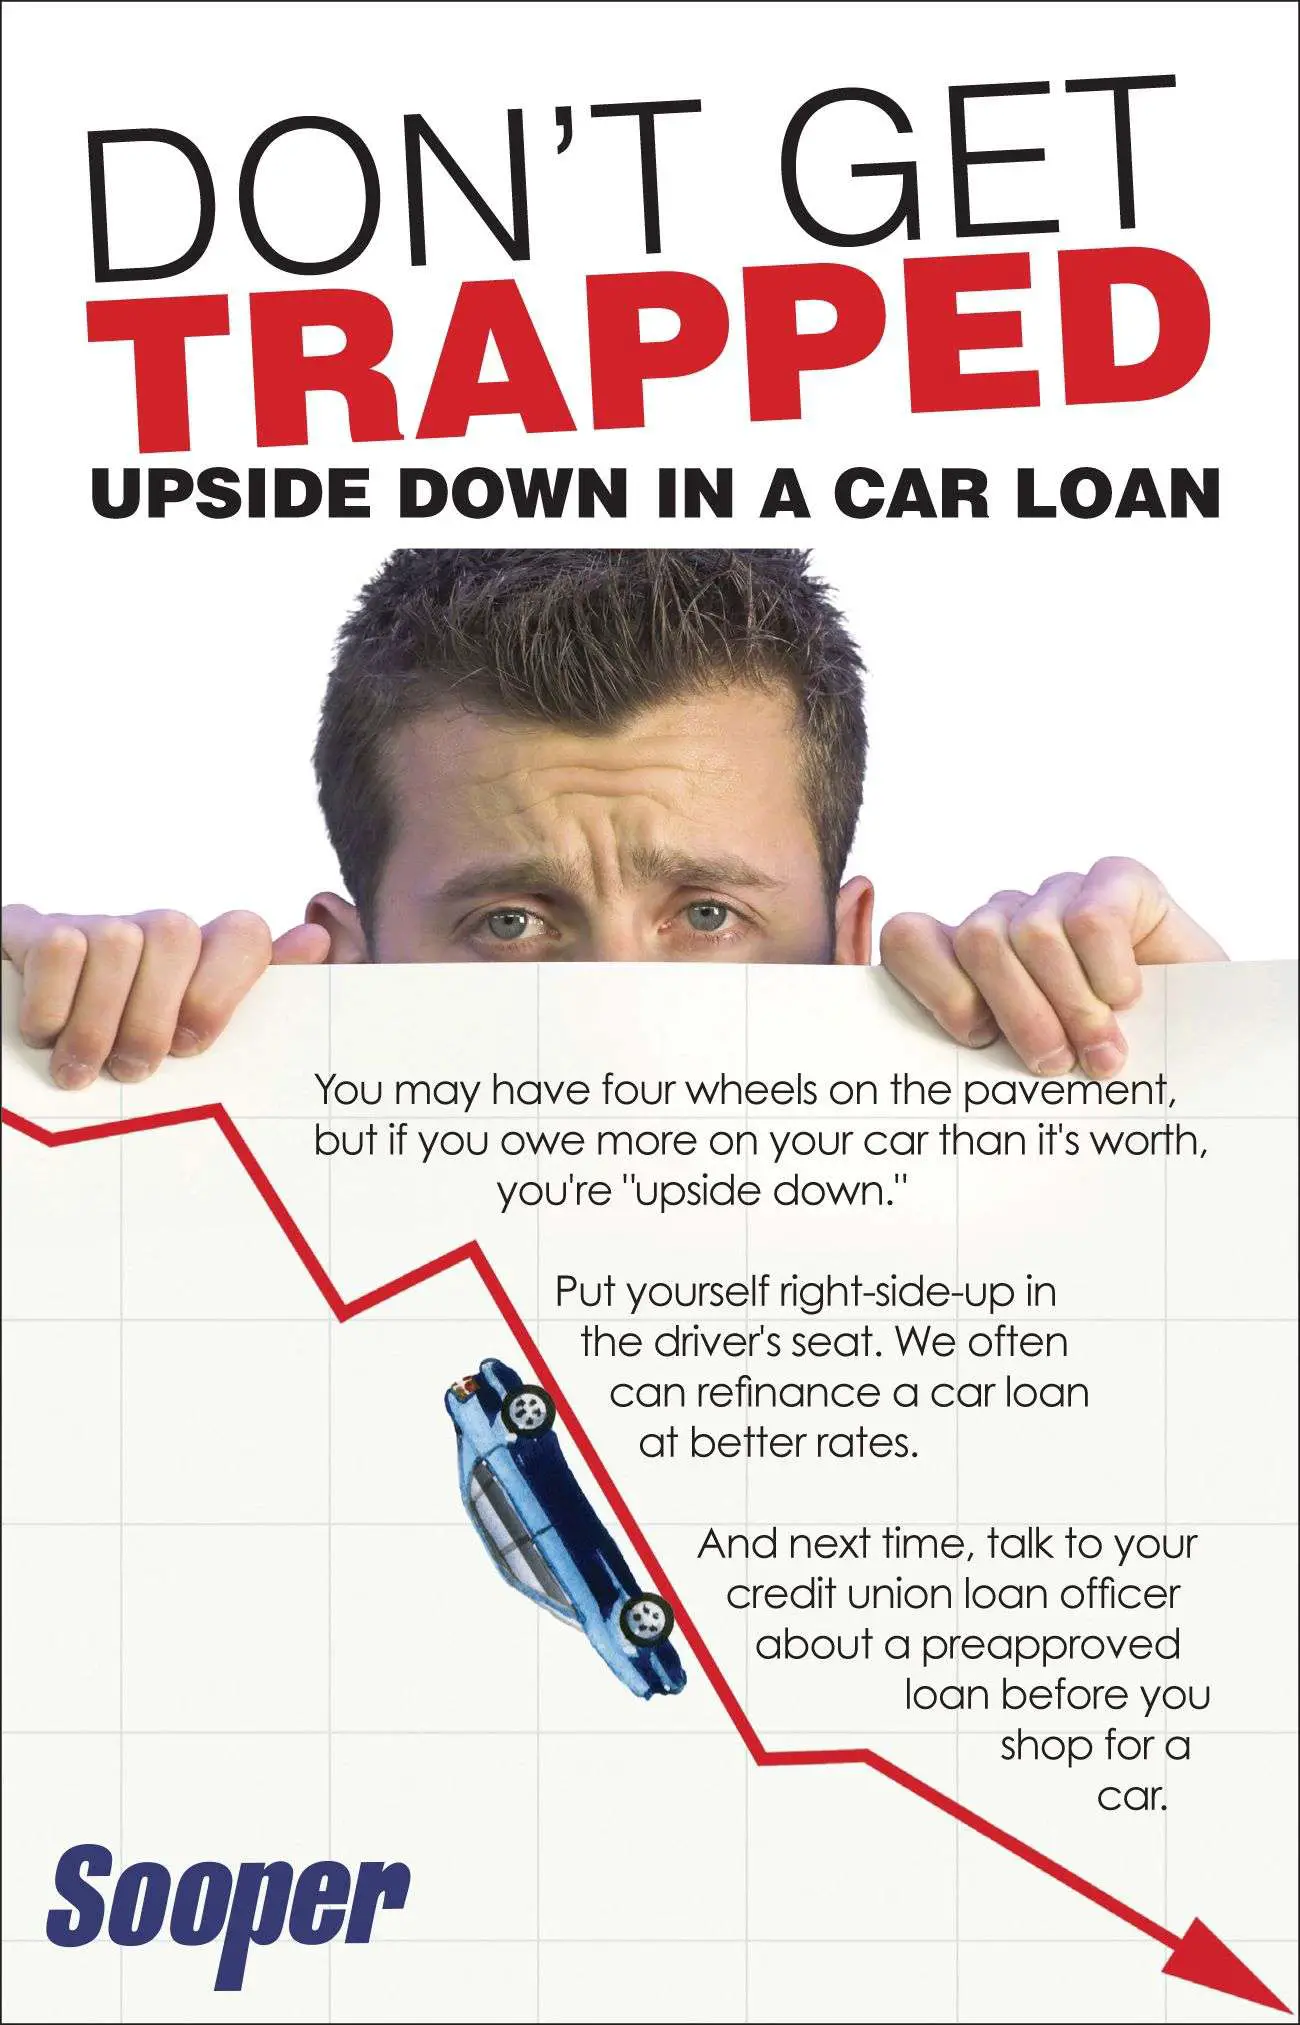 Trapped in an upside down car loan? Refinance that loan with Sooper ...